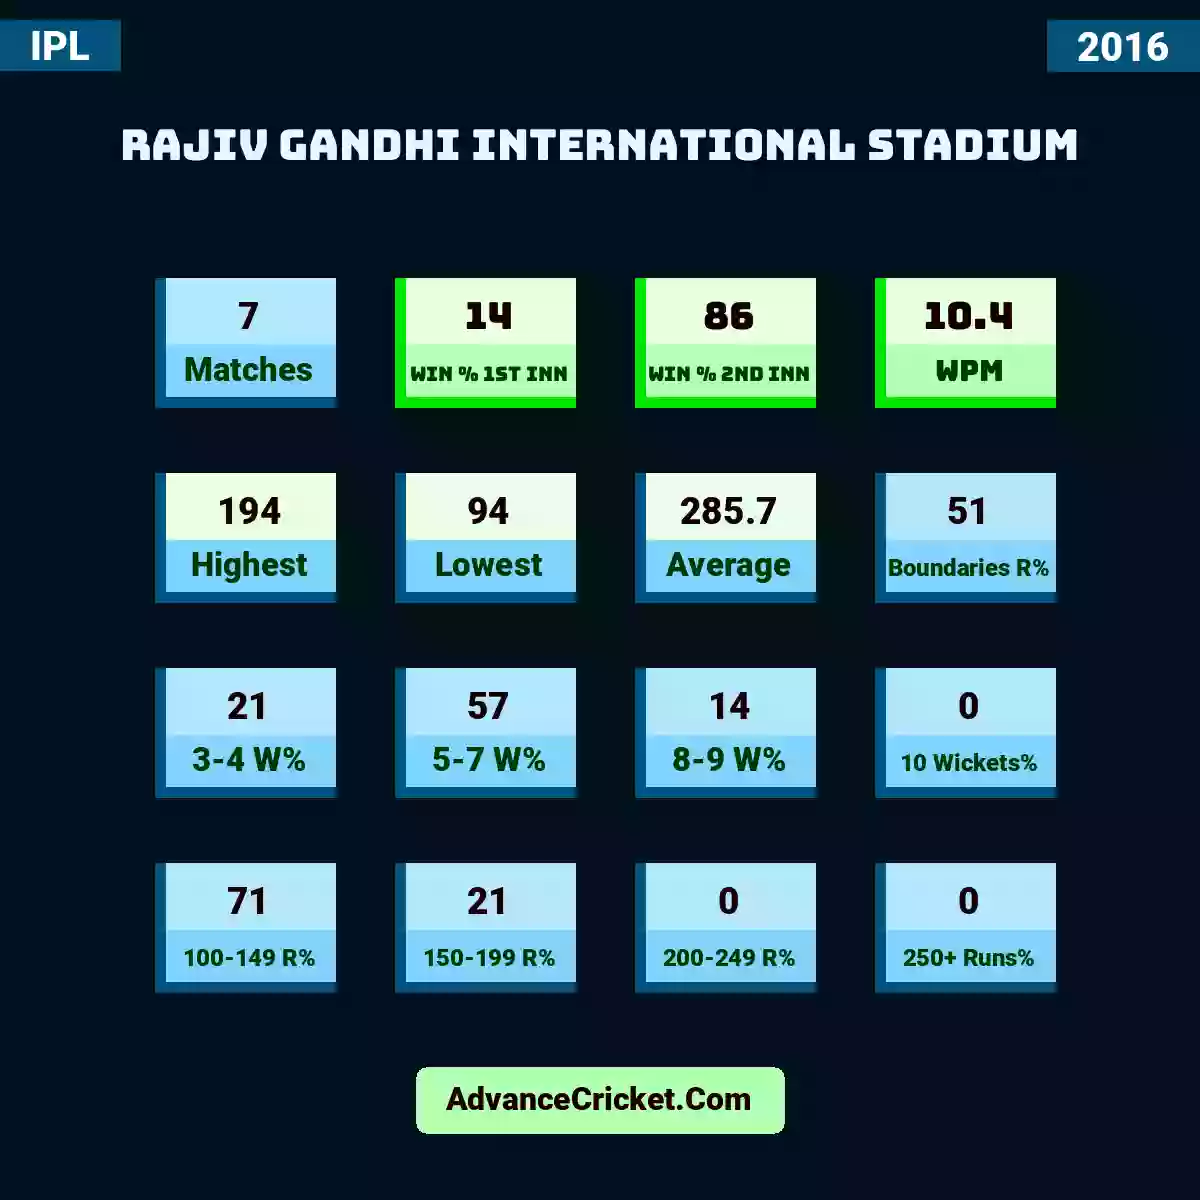 Image showing Rajiv Gandhi International Stadium with Matches: 7, Win % 1st Inn: 14, Win % 2nd Inn: 86, WPM: 10.4, Highest: 194, Lowest: 94, Average: 285.7, Boundaries R%: 51, 3-4 W%: 21, 5-7 W%: 57, 8-9 W%: 14, 10 Wickets%: 0, 100-149 R%: 71, 150-199 R%: 21, 200-249 R%: 0, 250+ Runs%: 0.